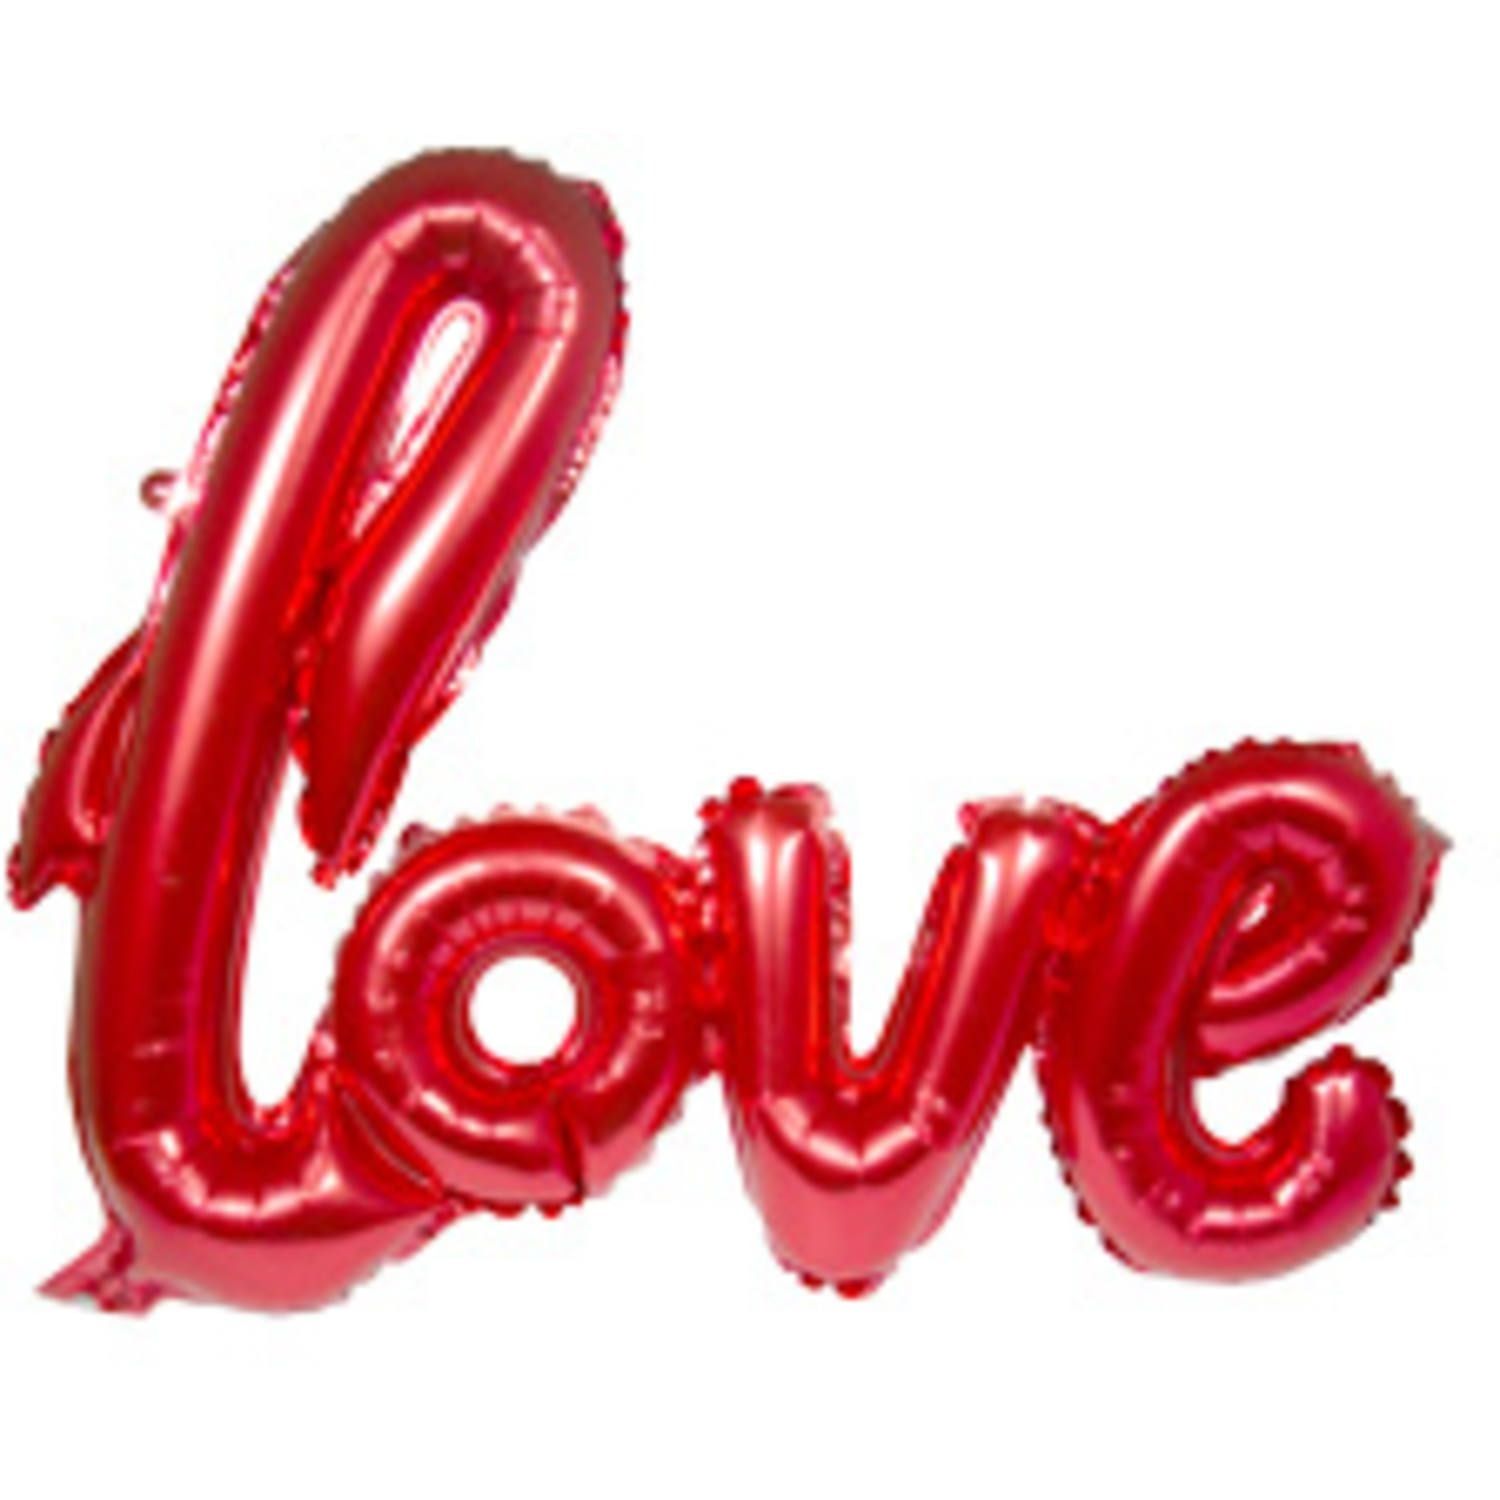 Folieballon letters love rood 70cm